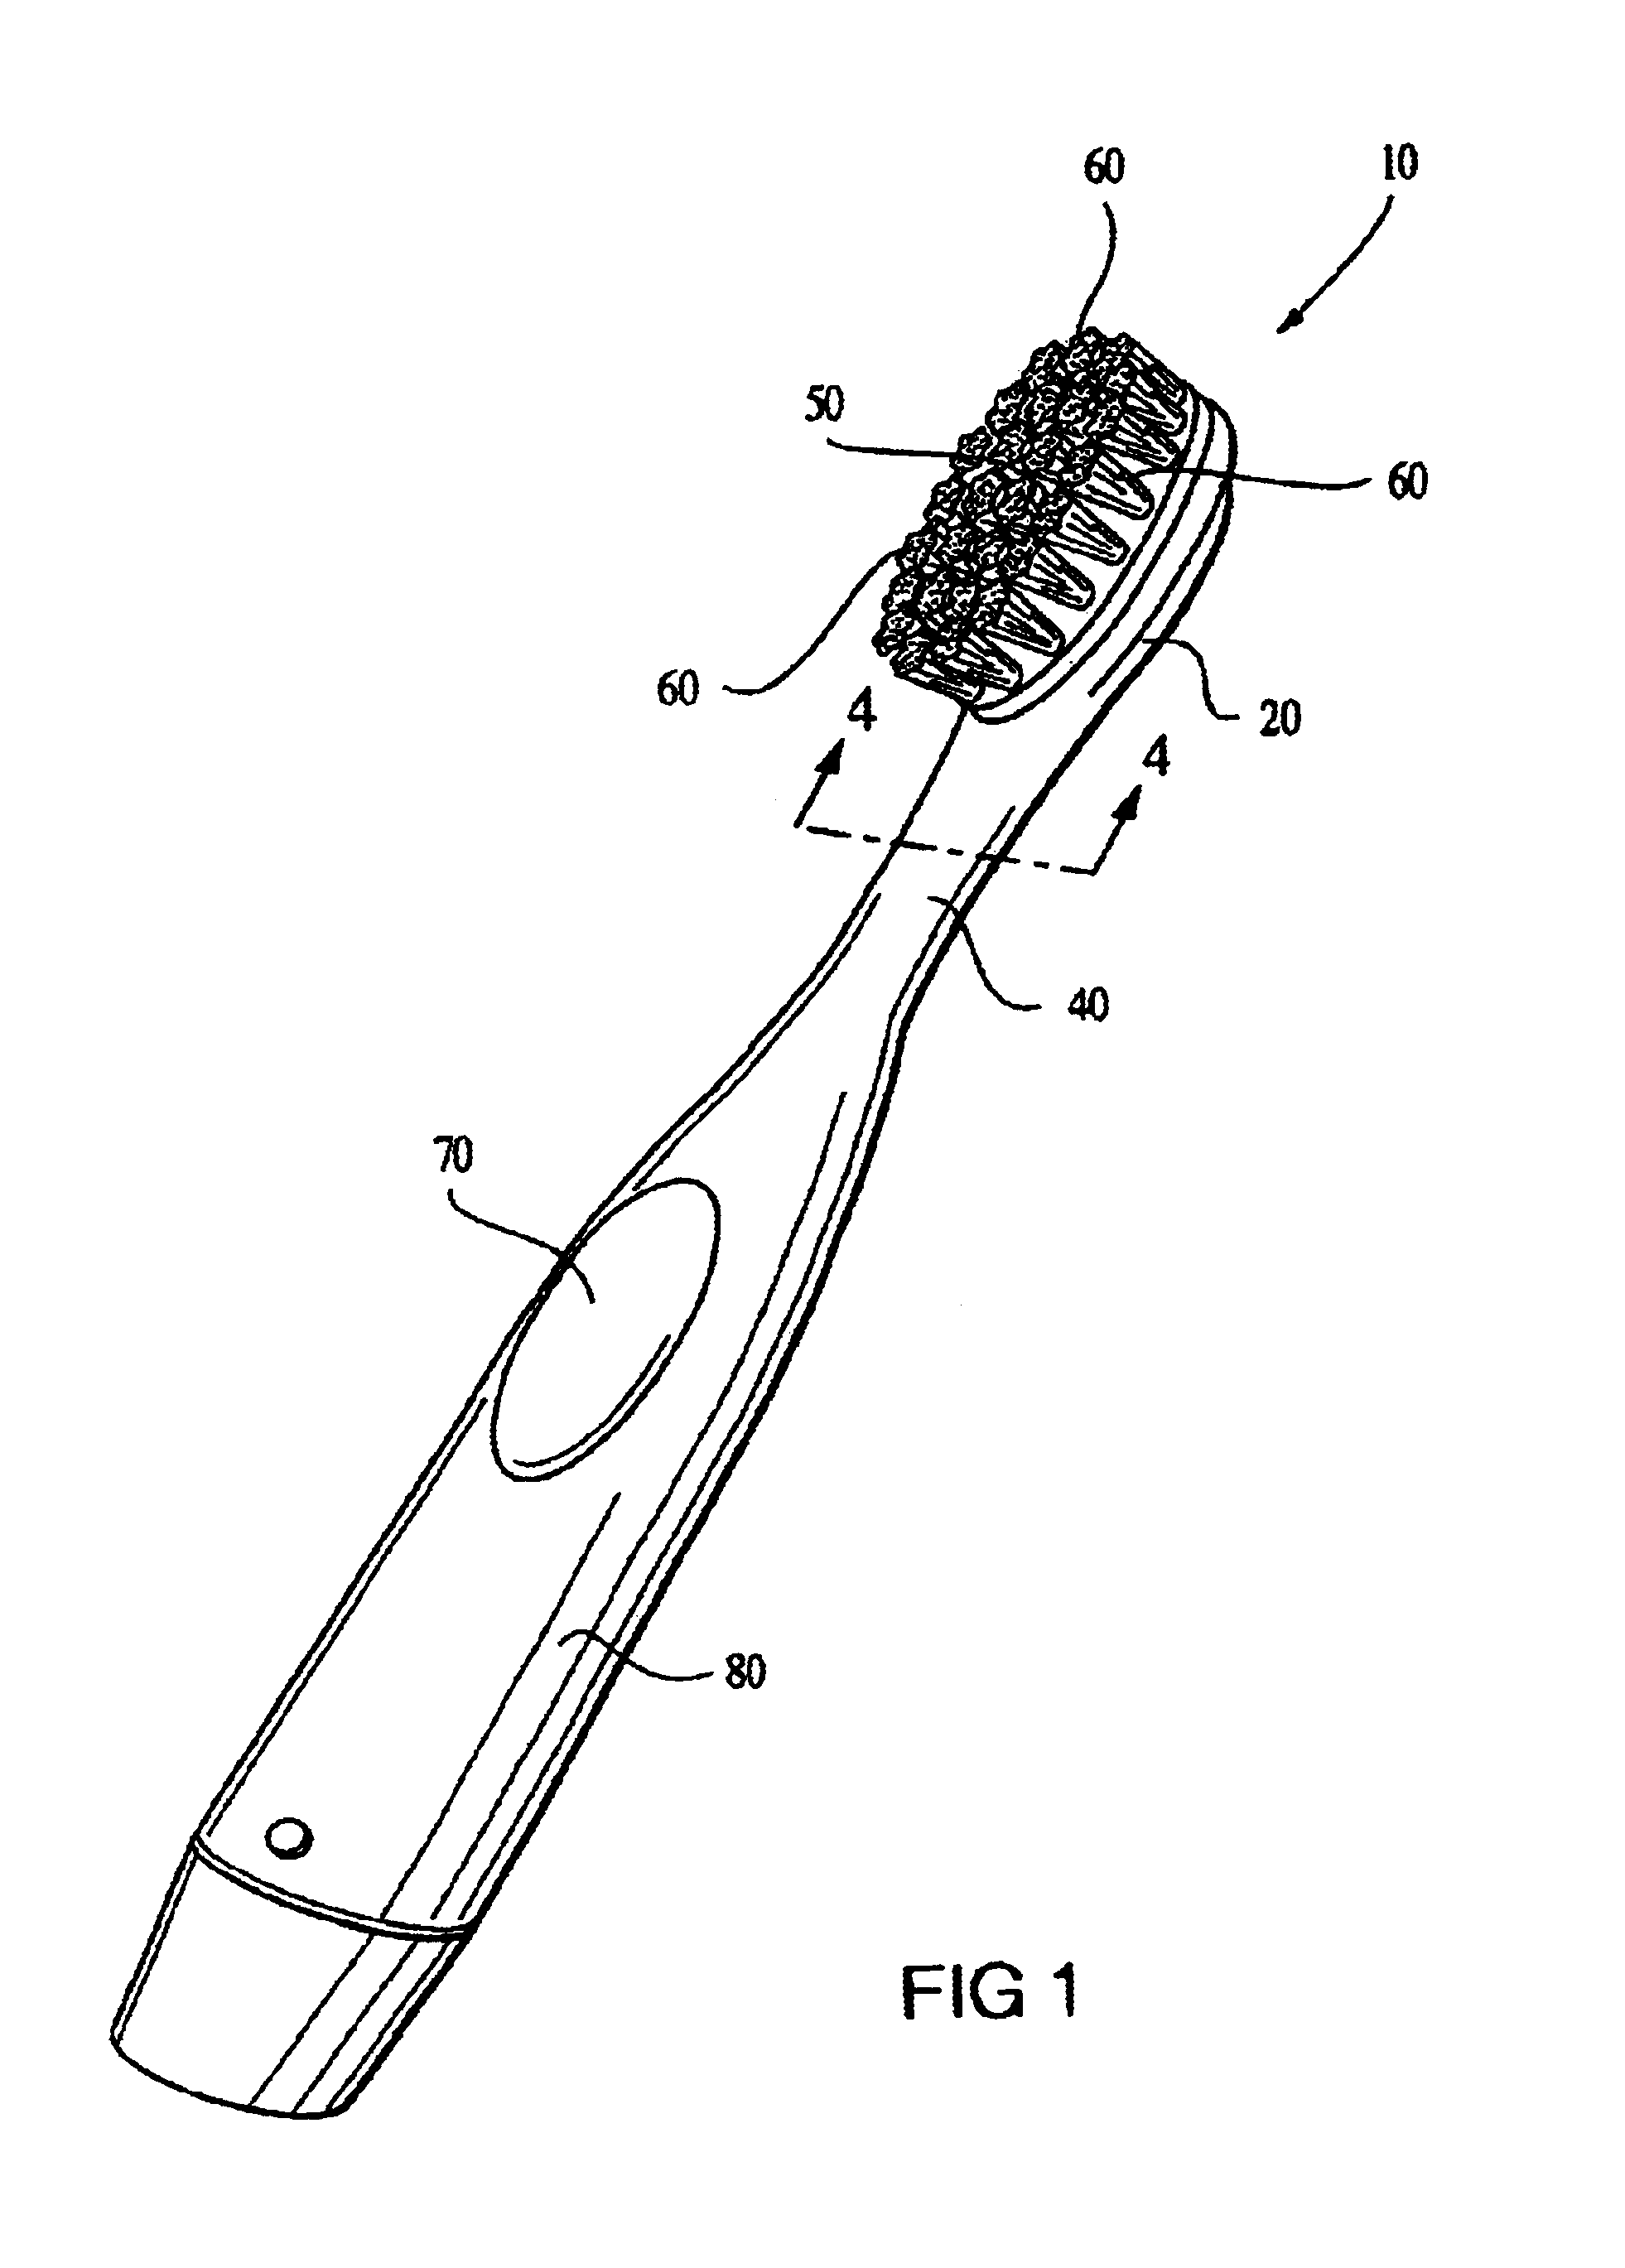 Electric toothbrushes having flexible necks